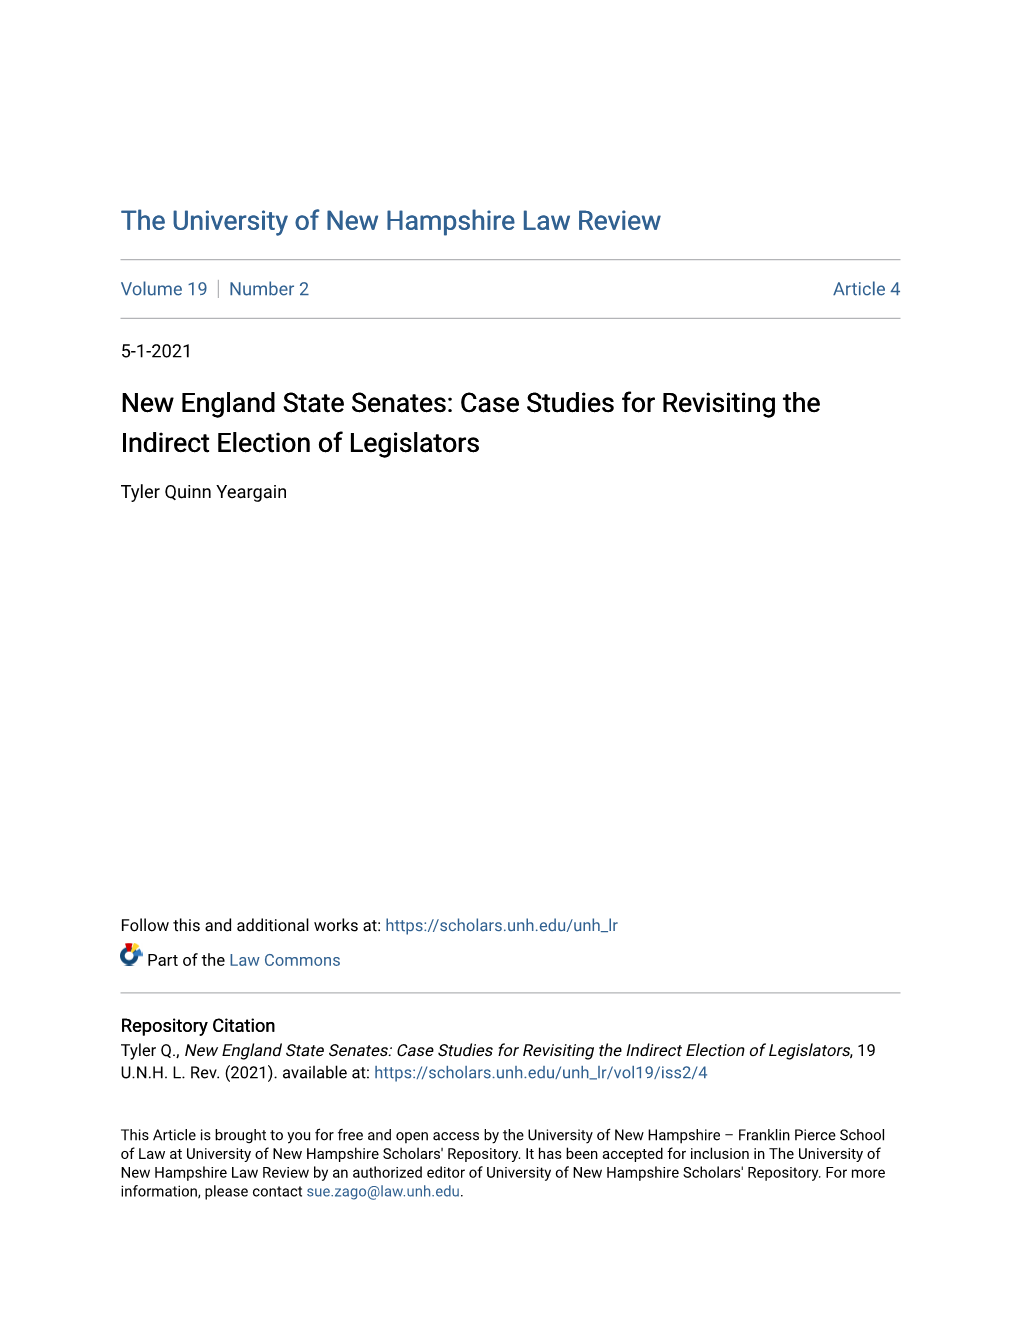 New England State Senates: Case Studies for Revisiting the Indirect Election of Legislators